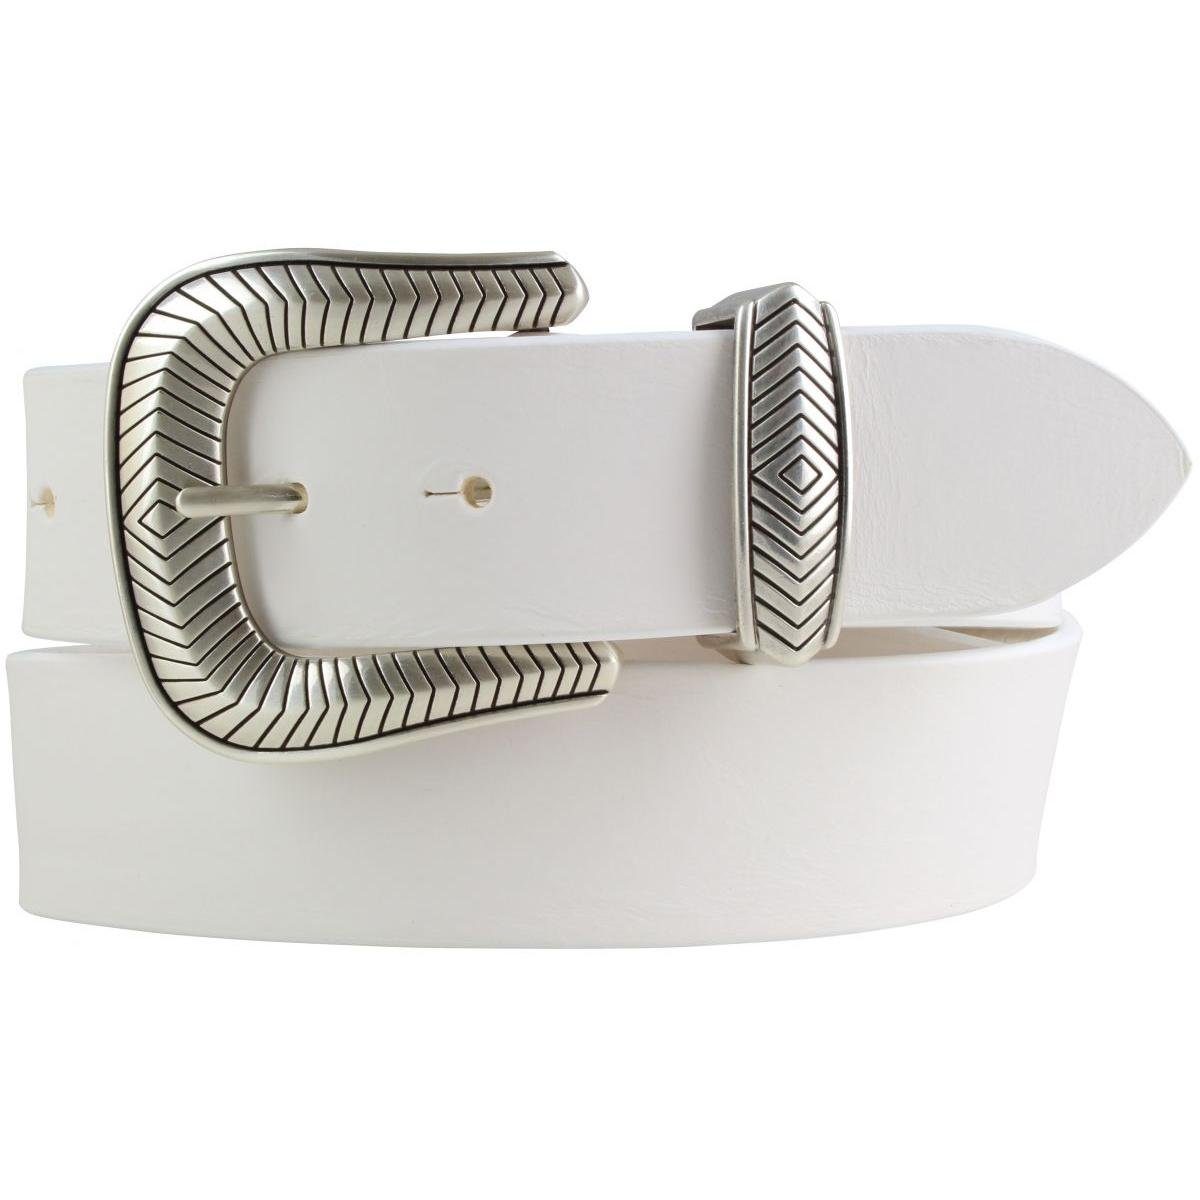 BELTINGER Ledergürtel Designer-Gürtel aus Vollrindleder mit Metall-Schlaufe 4 cm - Jeans-Gür Weiß, Silber